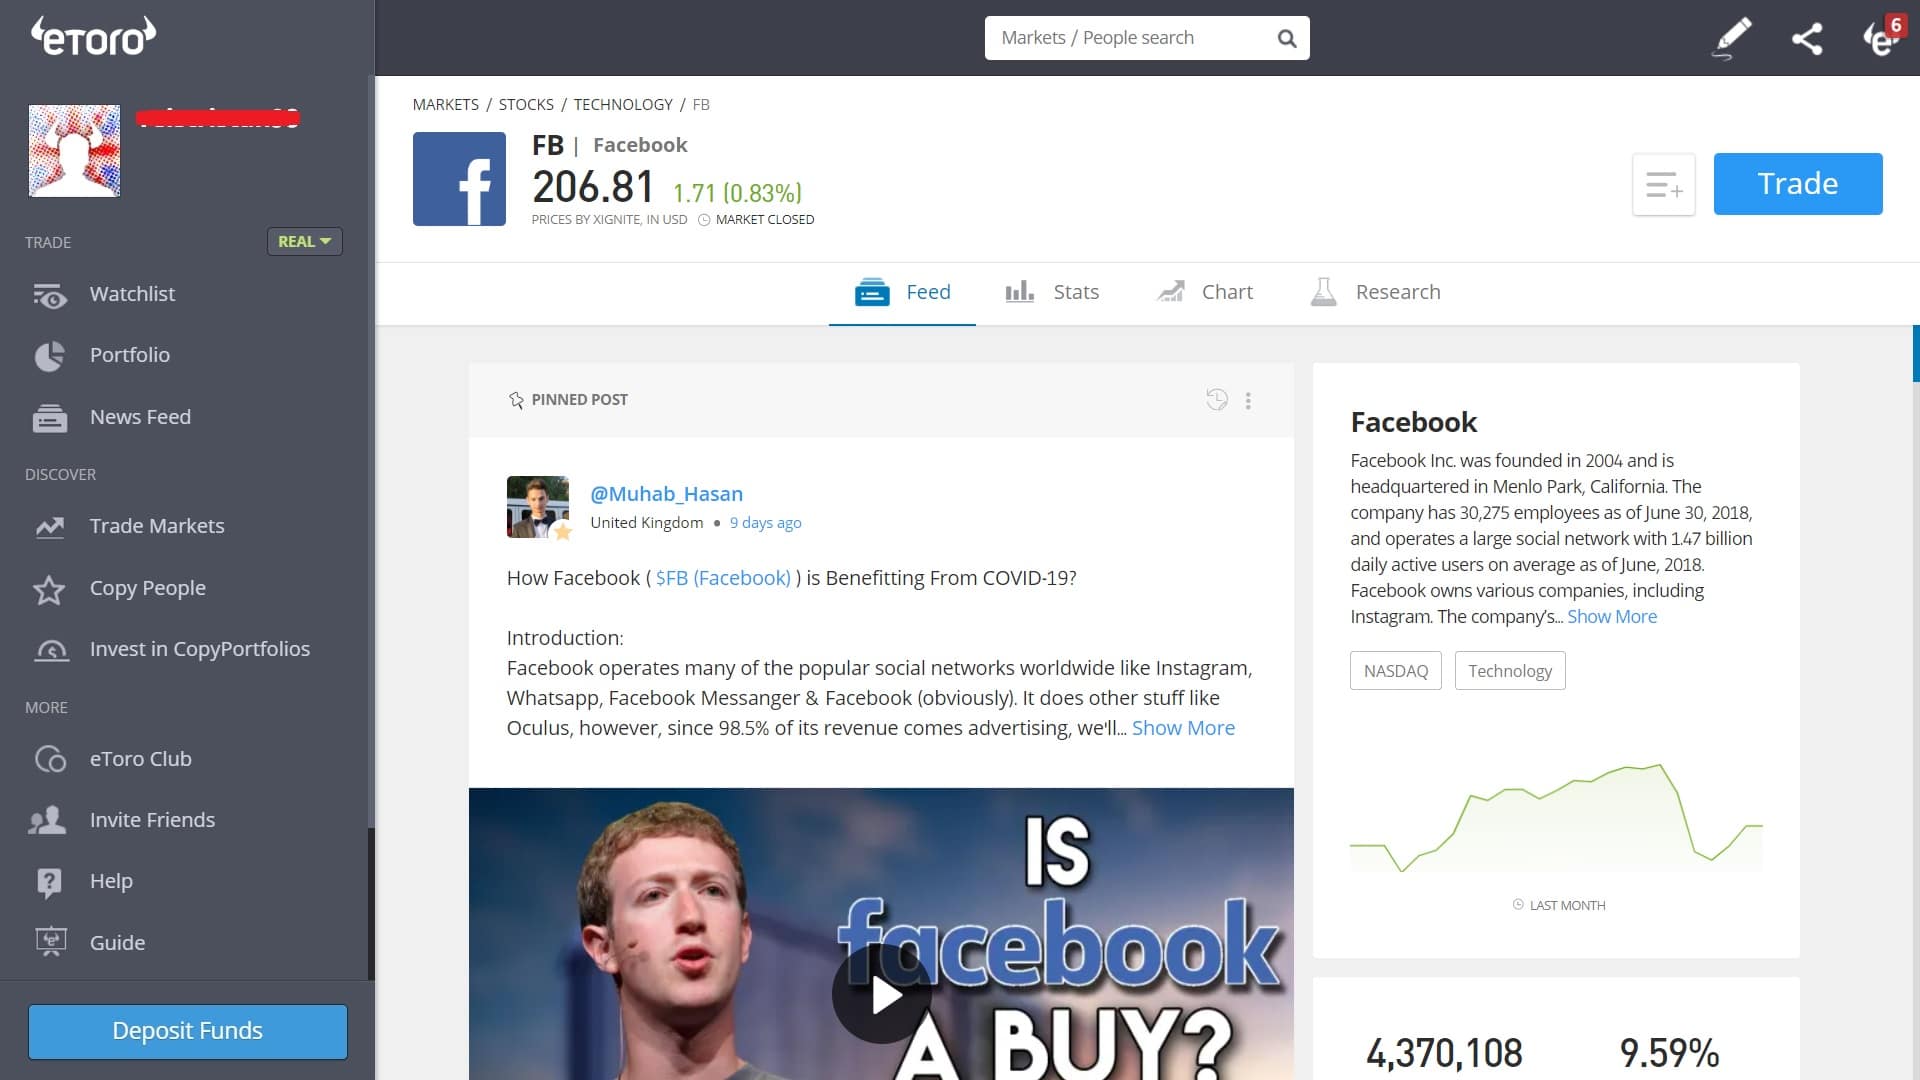 Facebook stock trading on eToro's platform